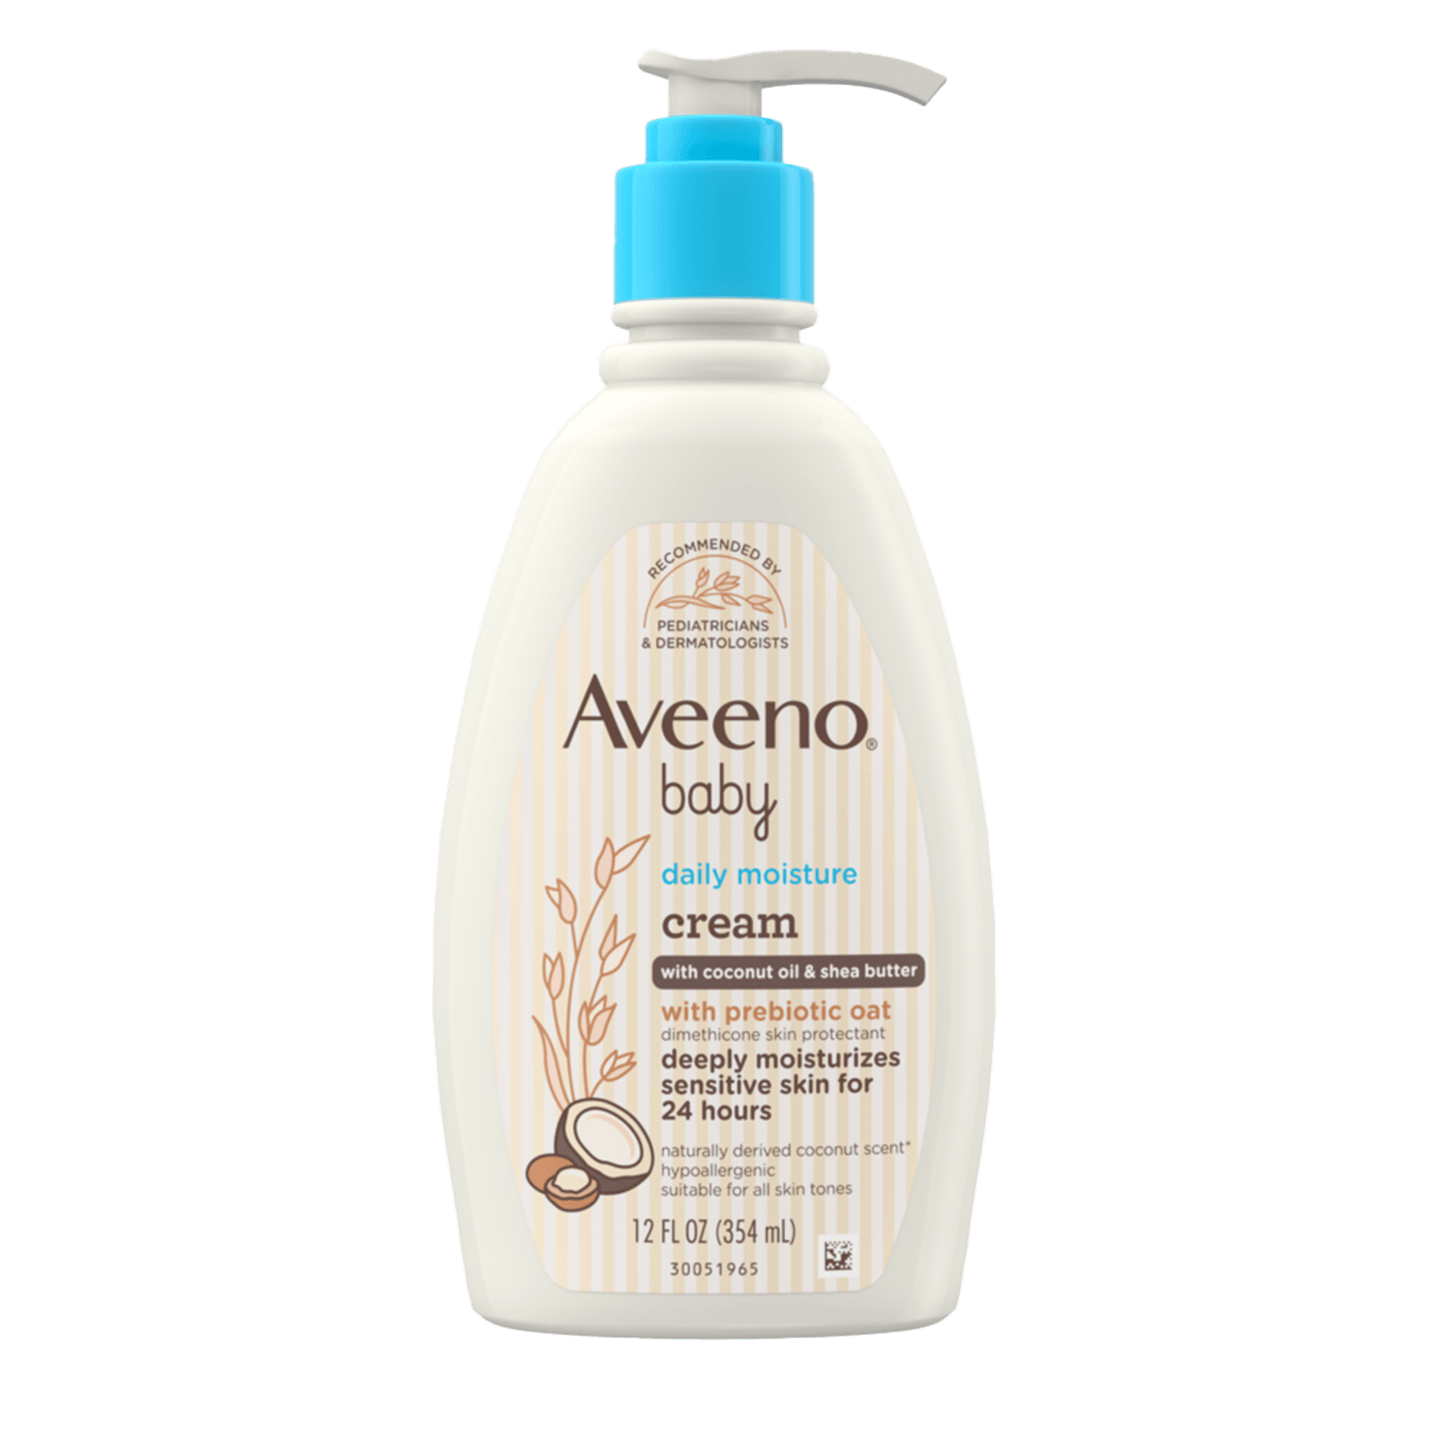 Aveeno Baby Daily Moisturizing Cream with Prebiotic Oat, Coconut Oil & Shea Butter - Kenya